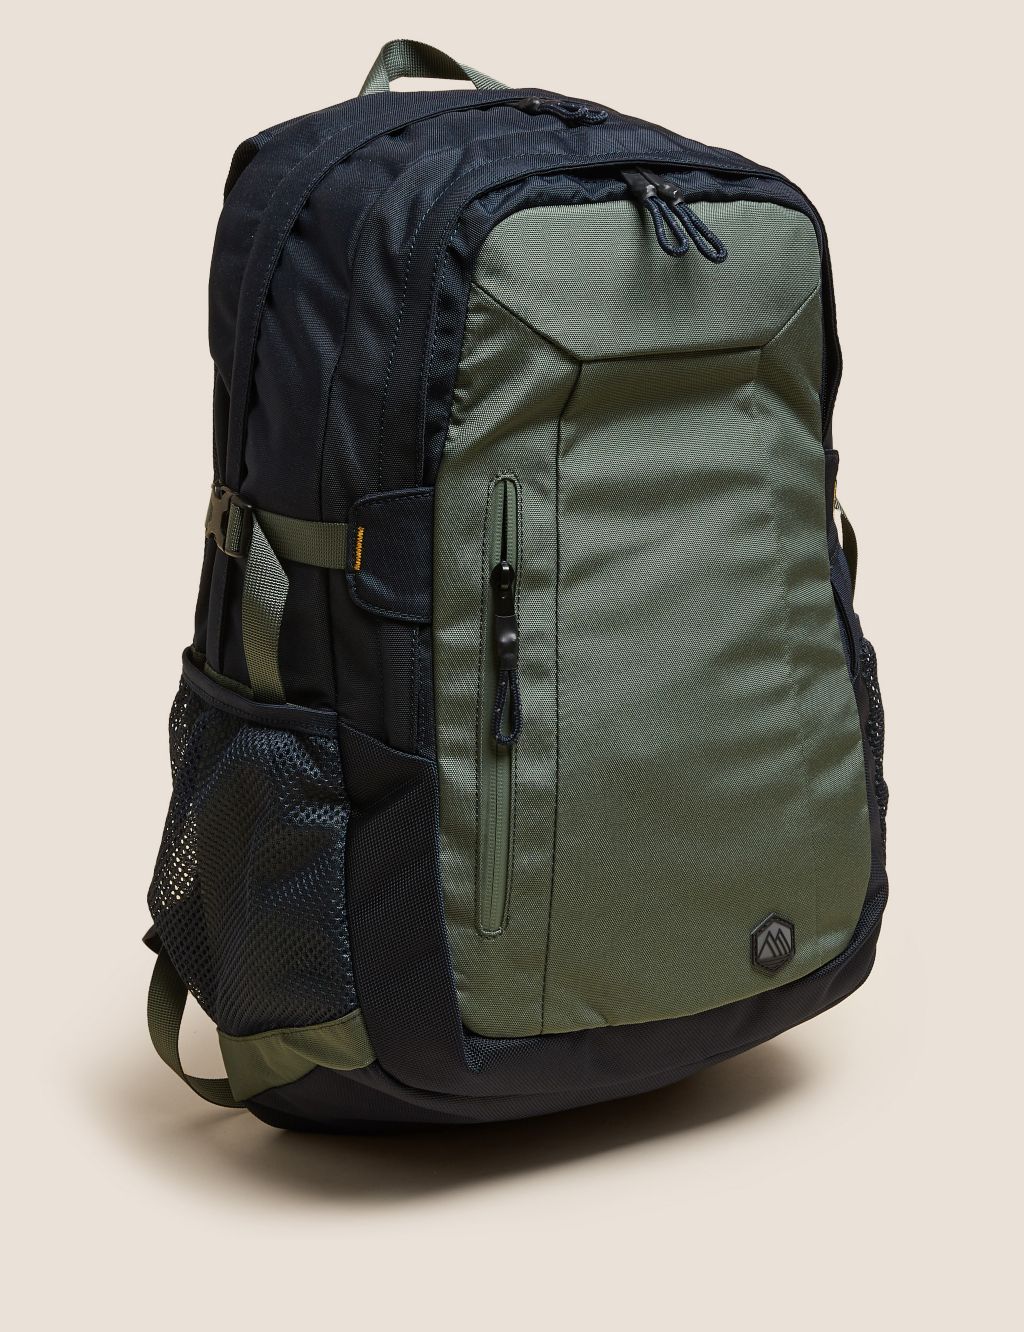 Backpack image 1